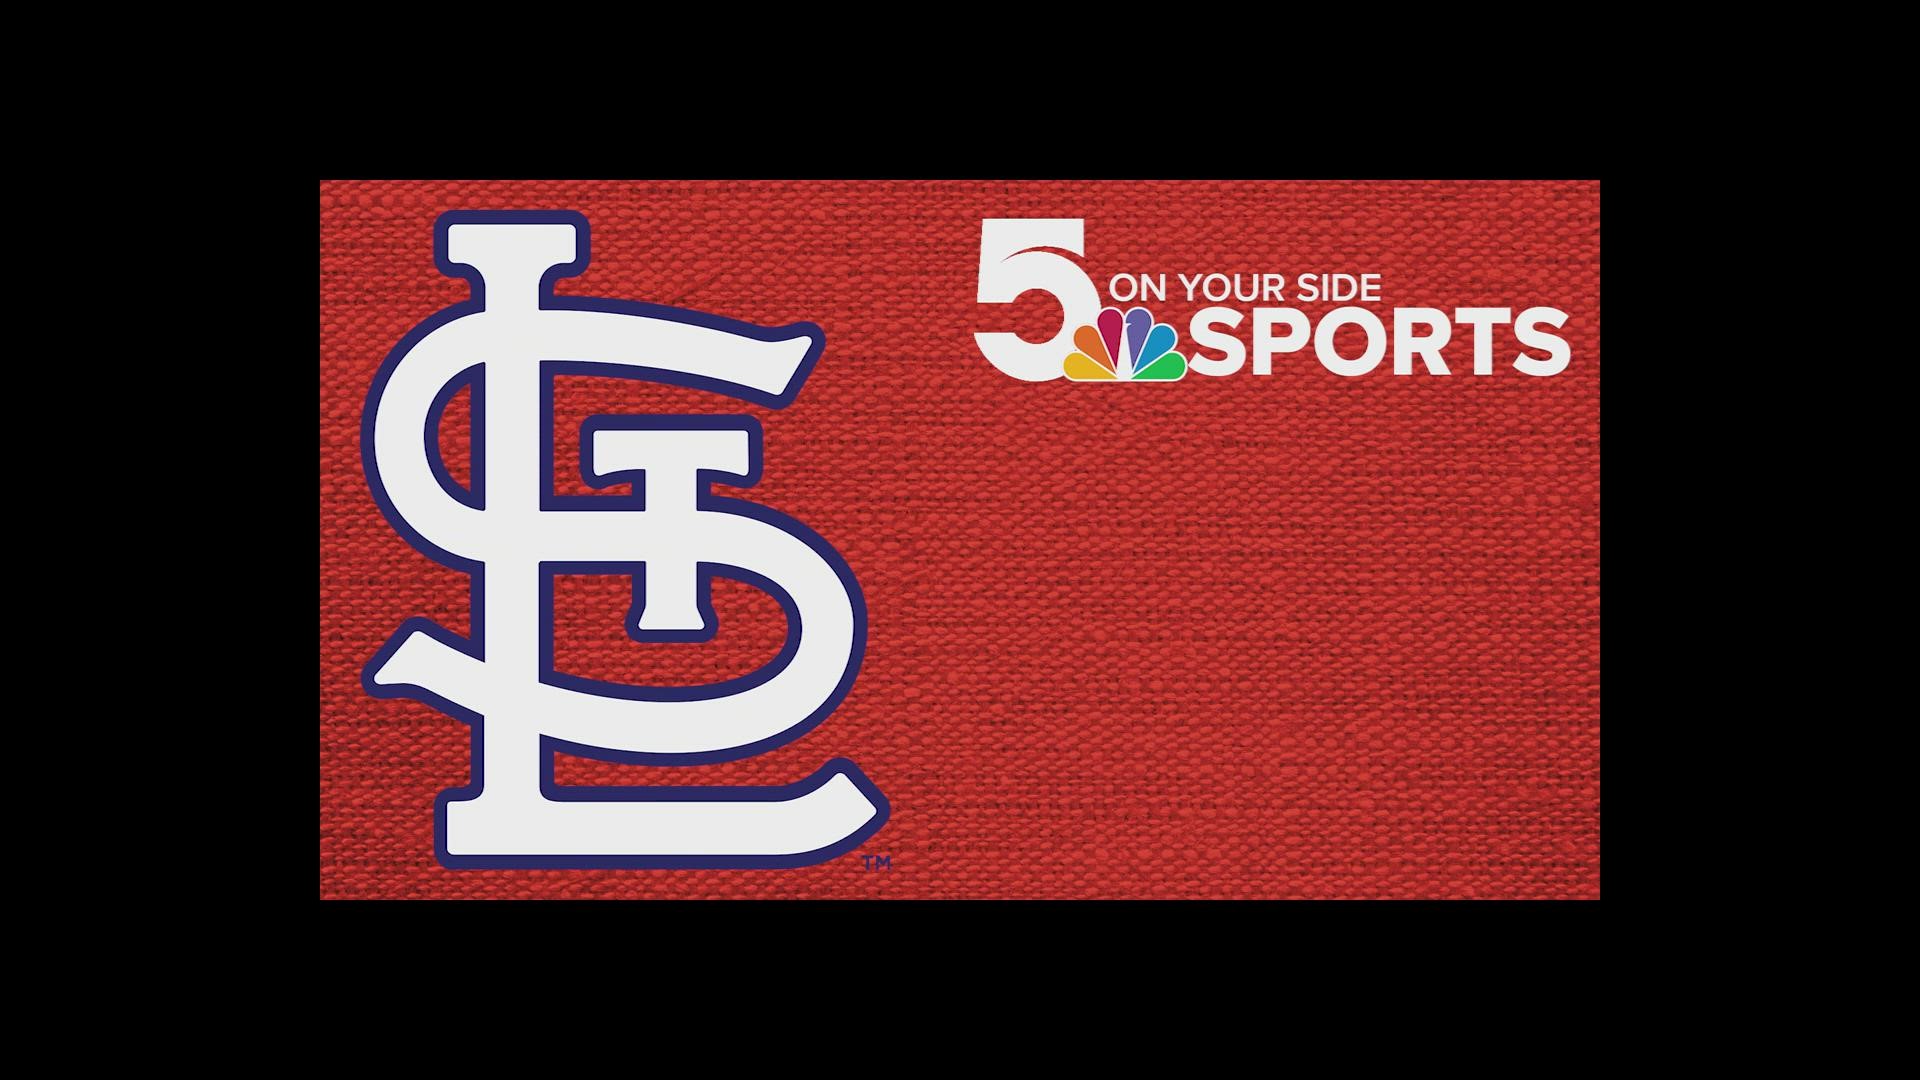 MLB Spring Training Reset: St. Louis Cardinals National News